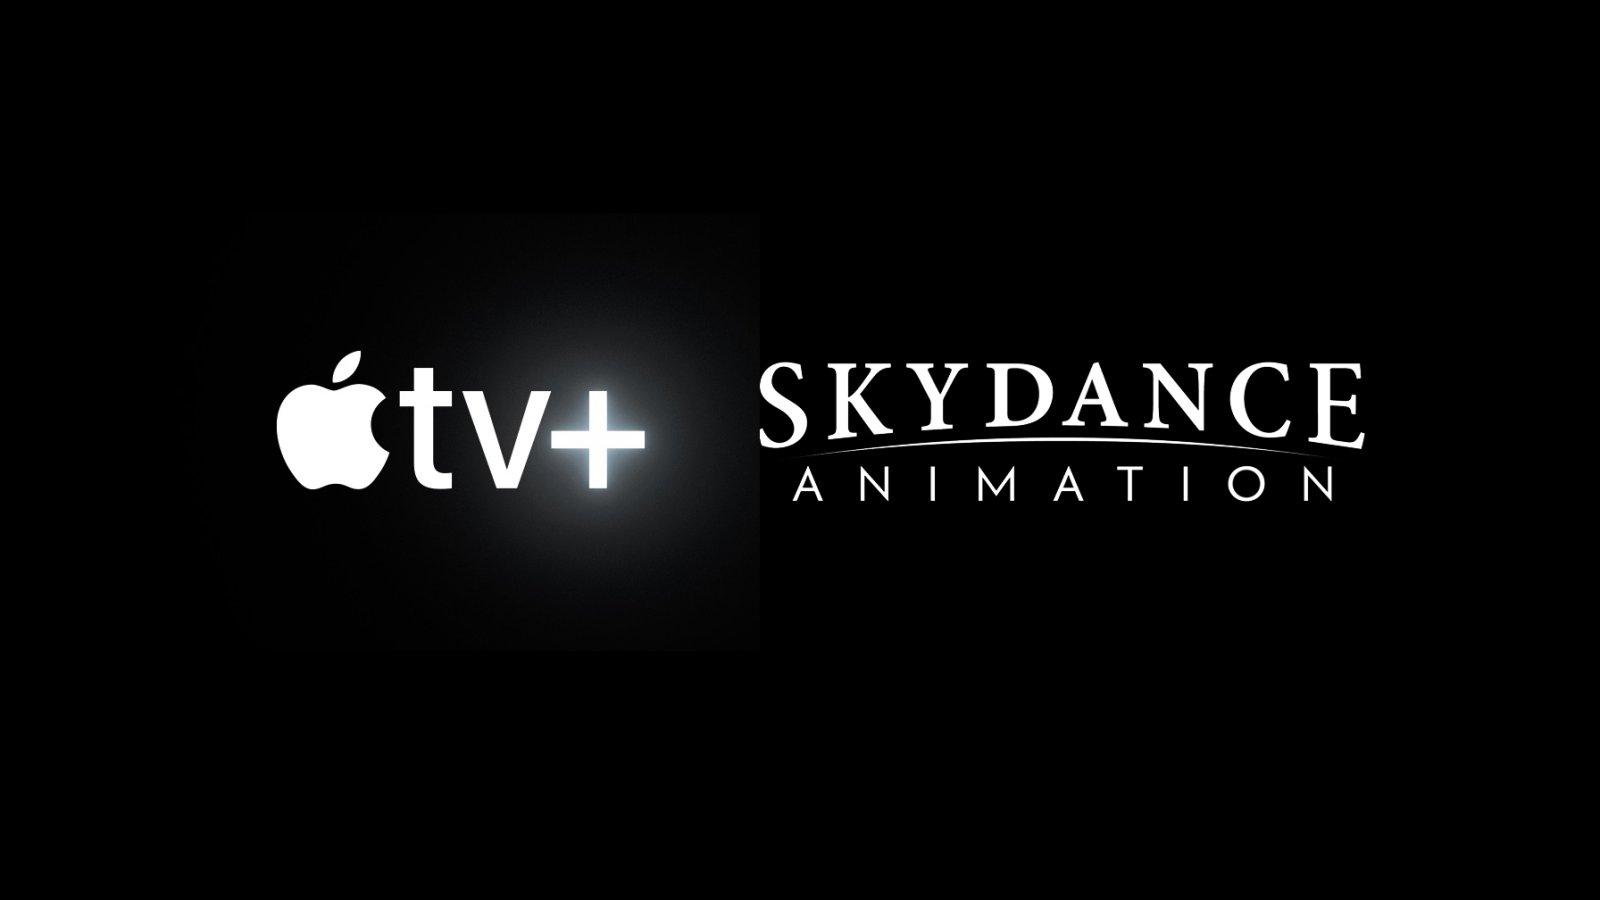 Apple แยกทางกับ Skydance Animation แต่ยังร่วมงานกับ Skydance Media รุกตลาดหนังระดับโลก